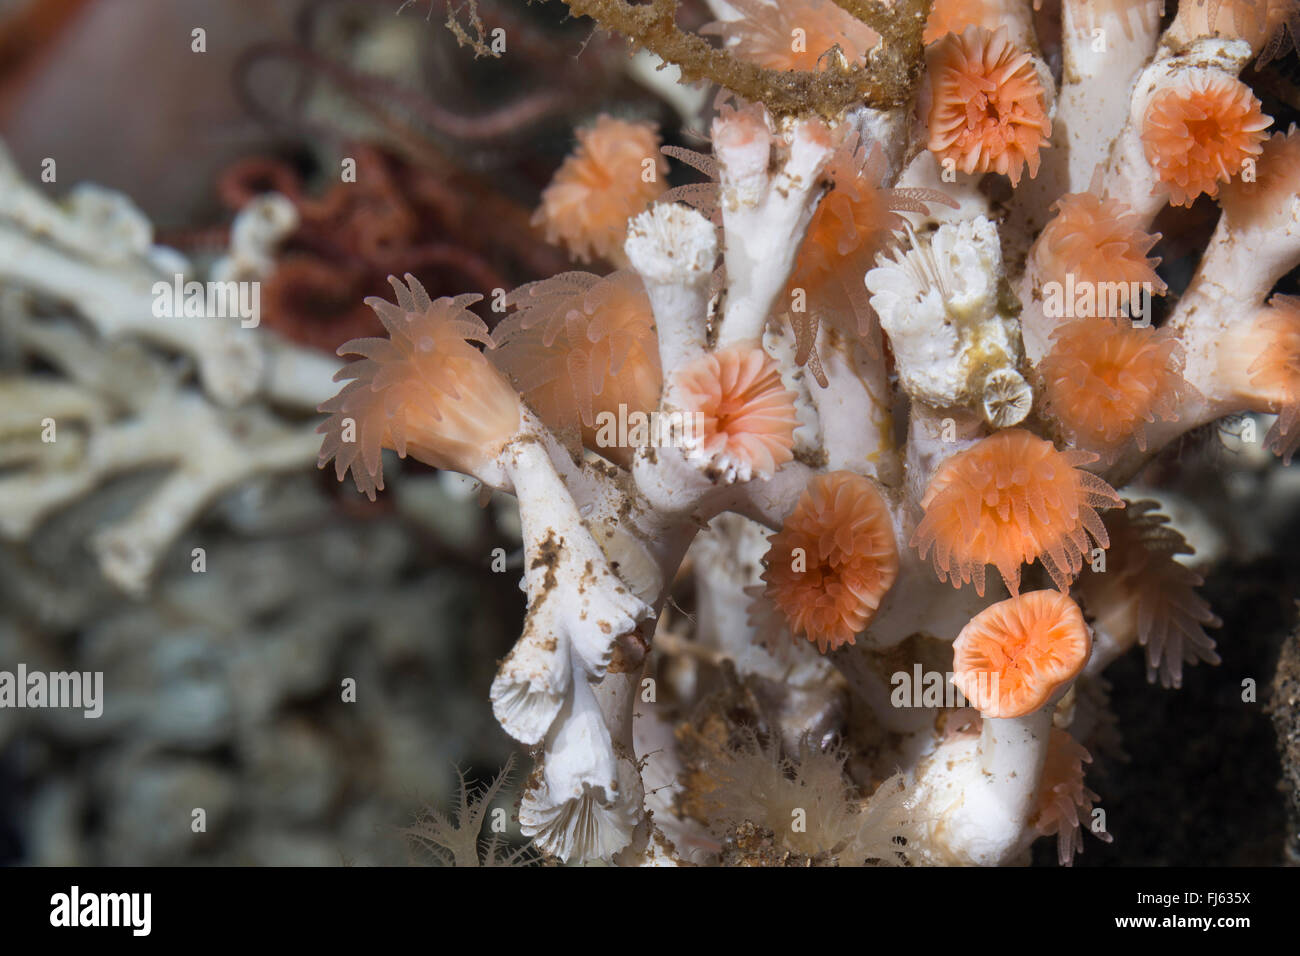 eye coral, cold-water coral, spider hazards (Lophelia pertusa, Madrepora pertusa), close-up view Stock Photo